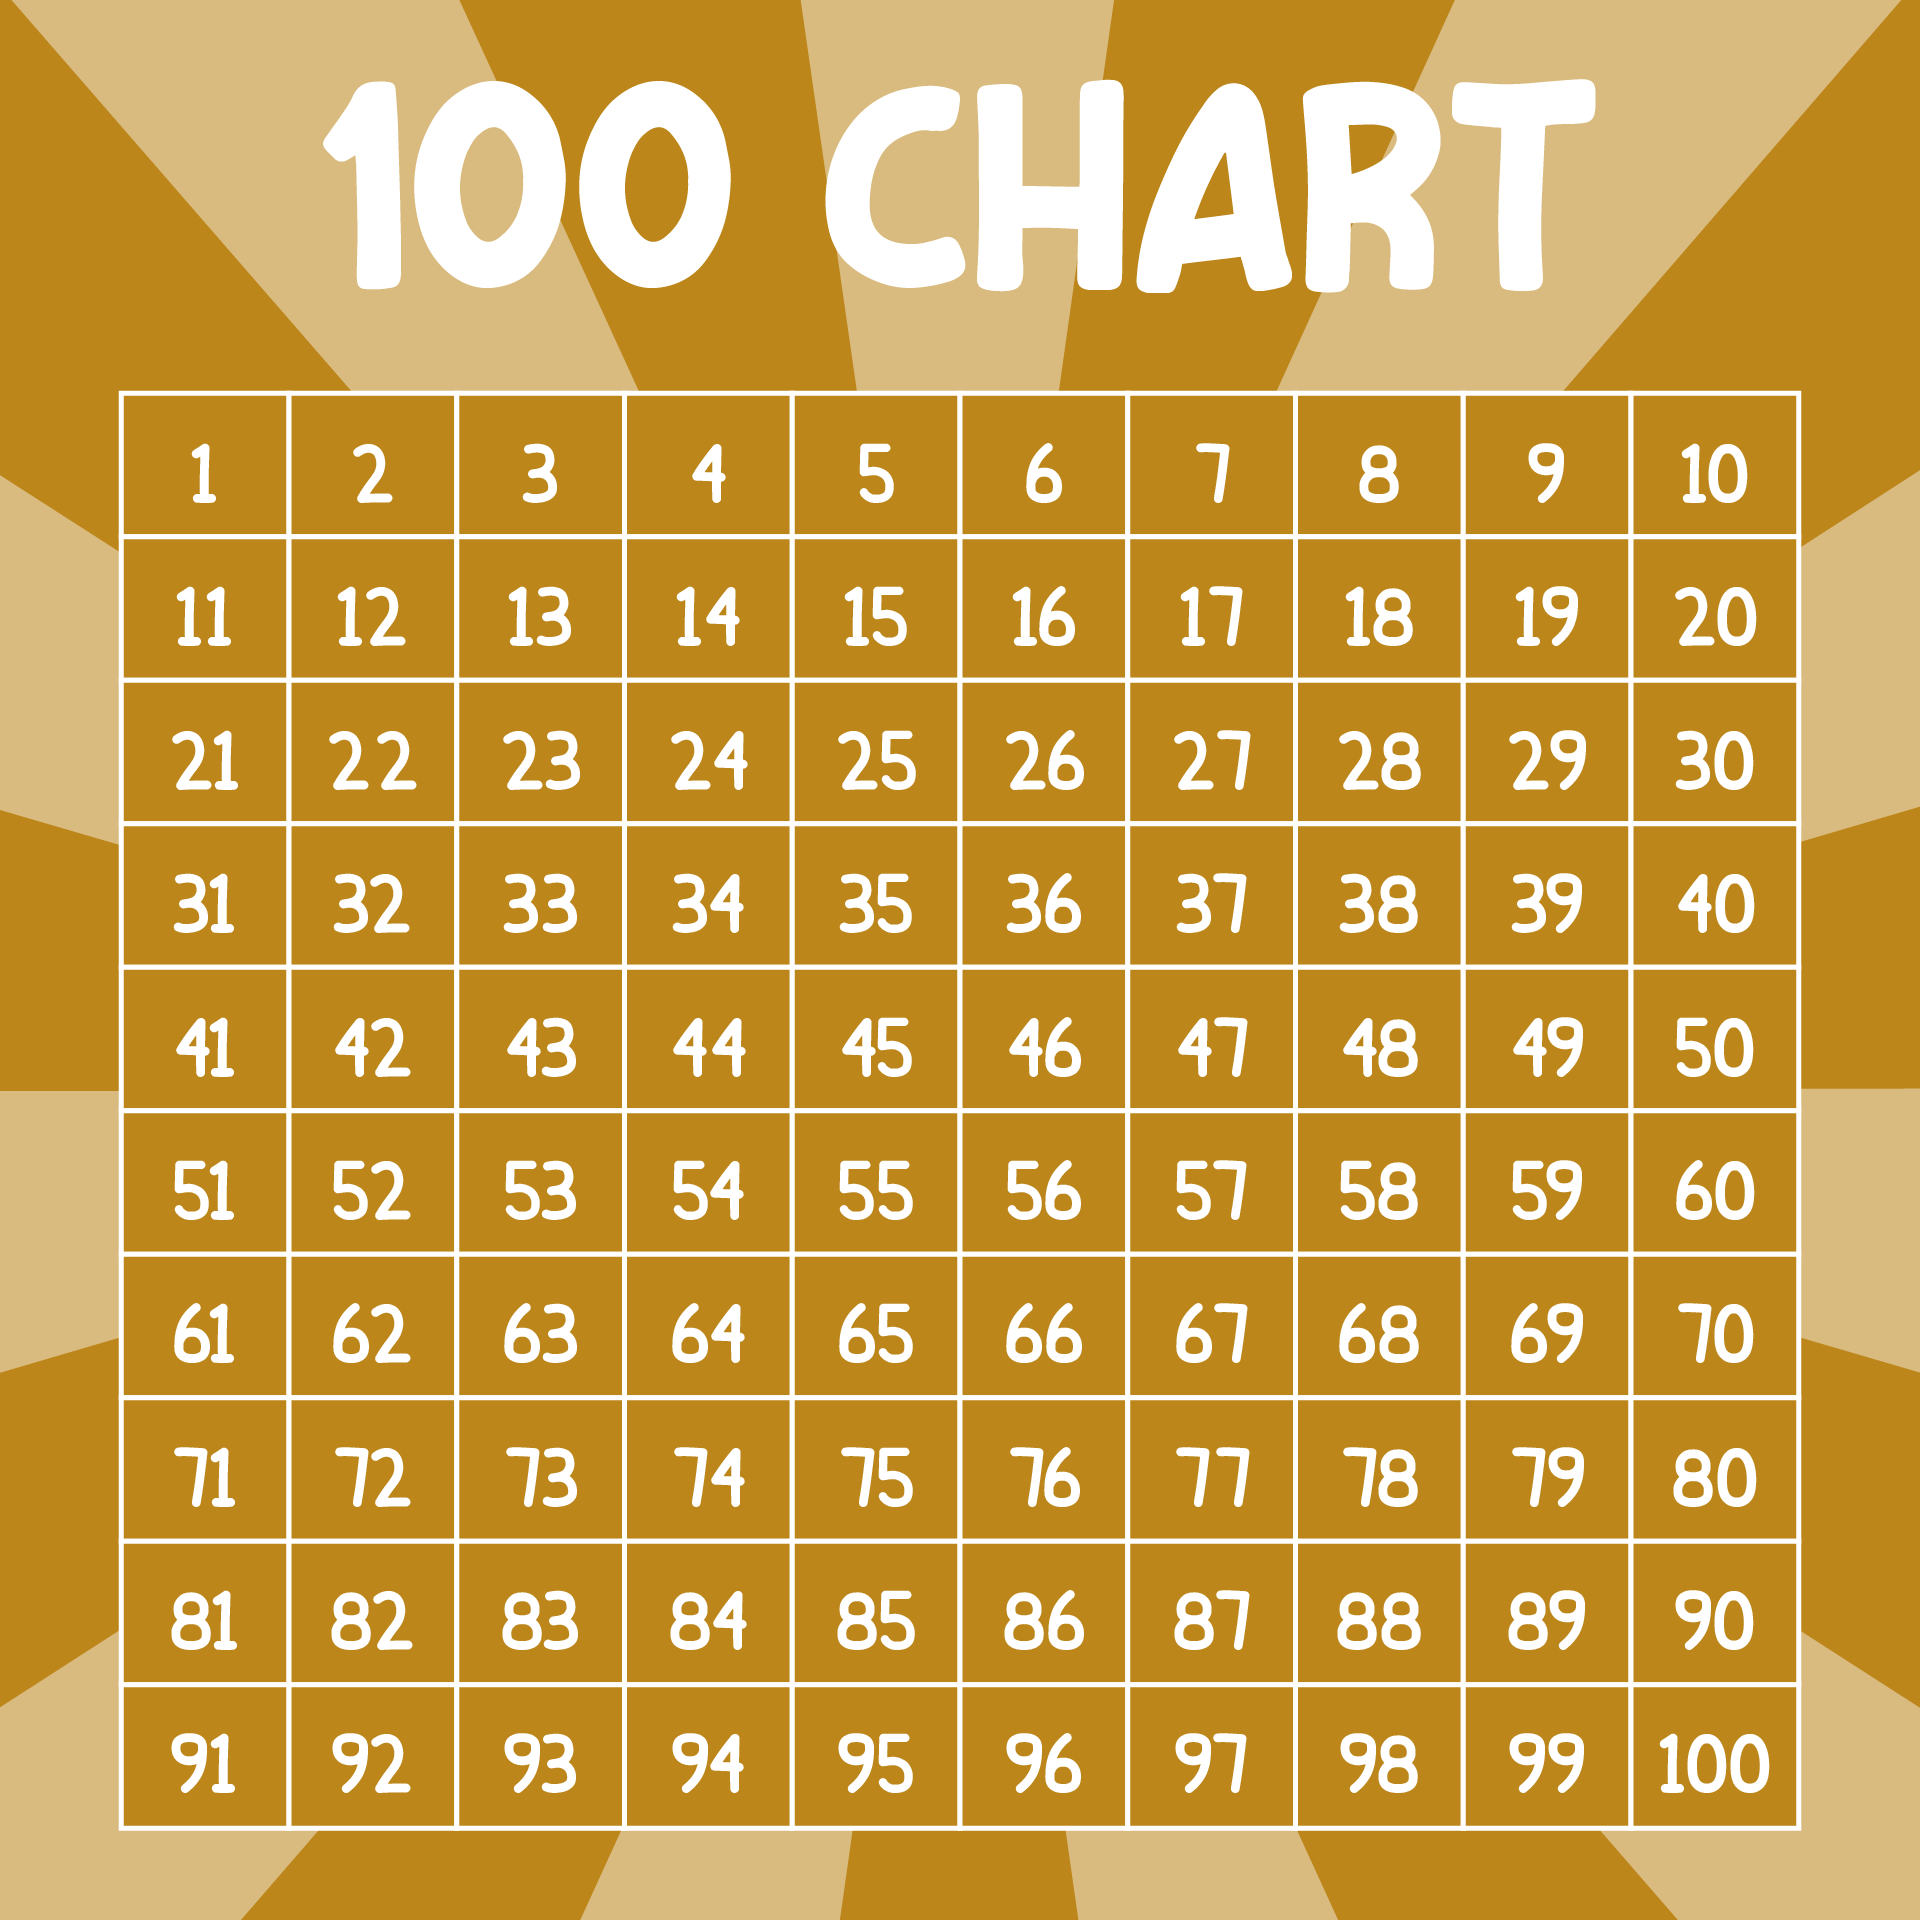 10-best-hundreds-chart-printable-printablee